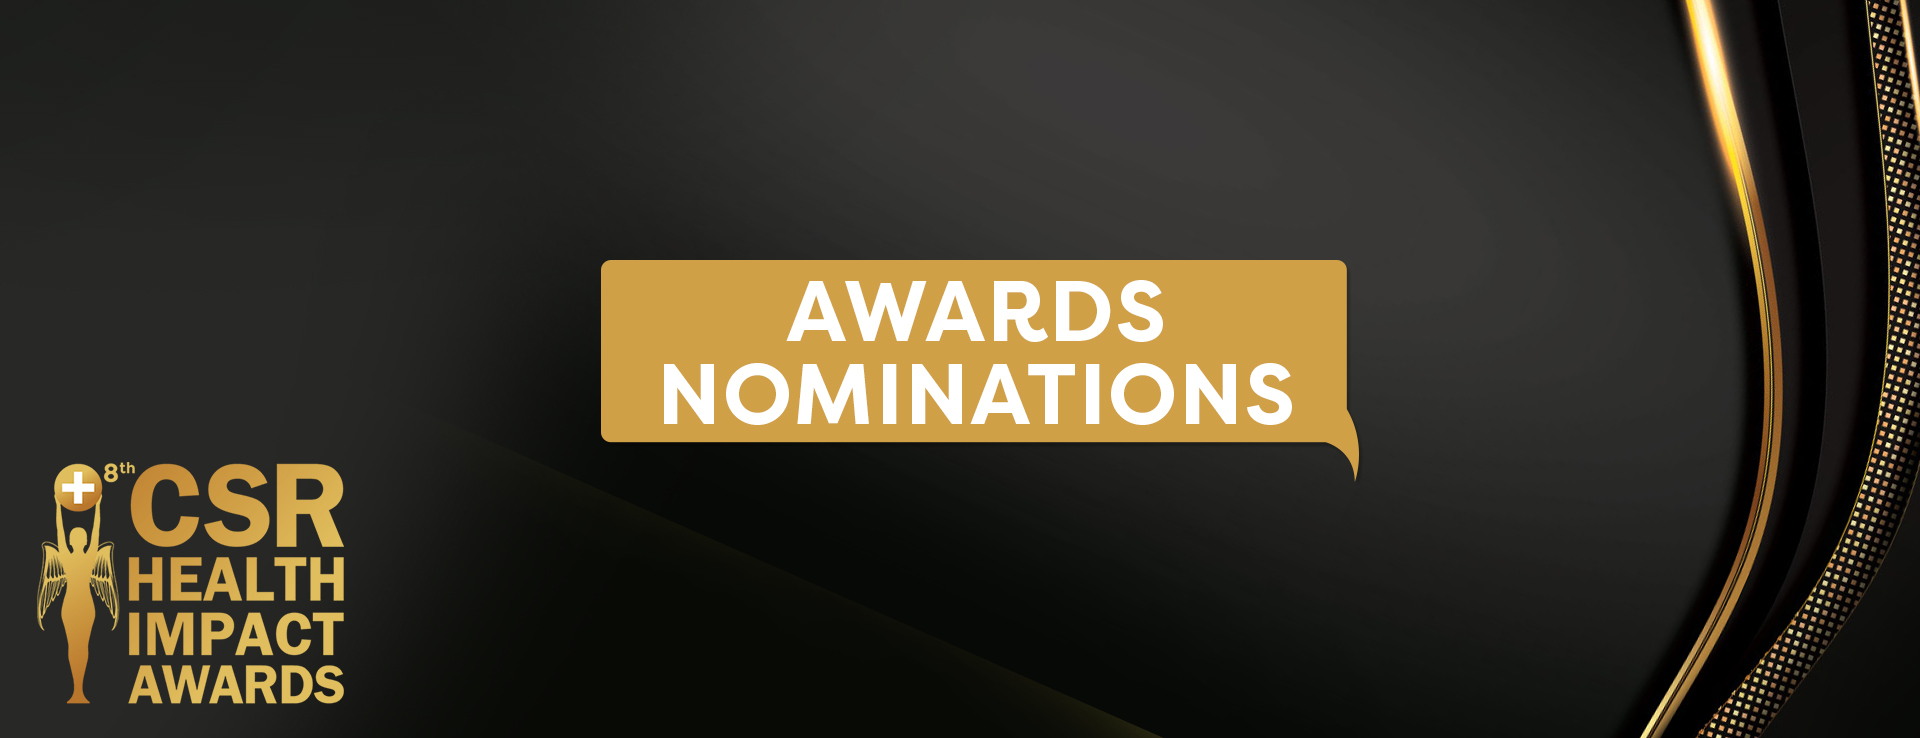 Awards-Nominations